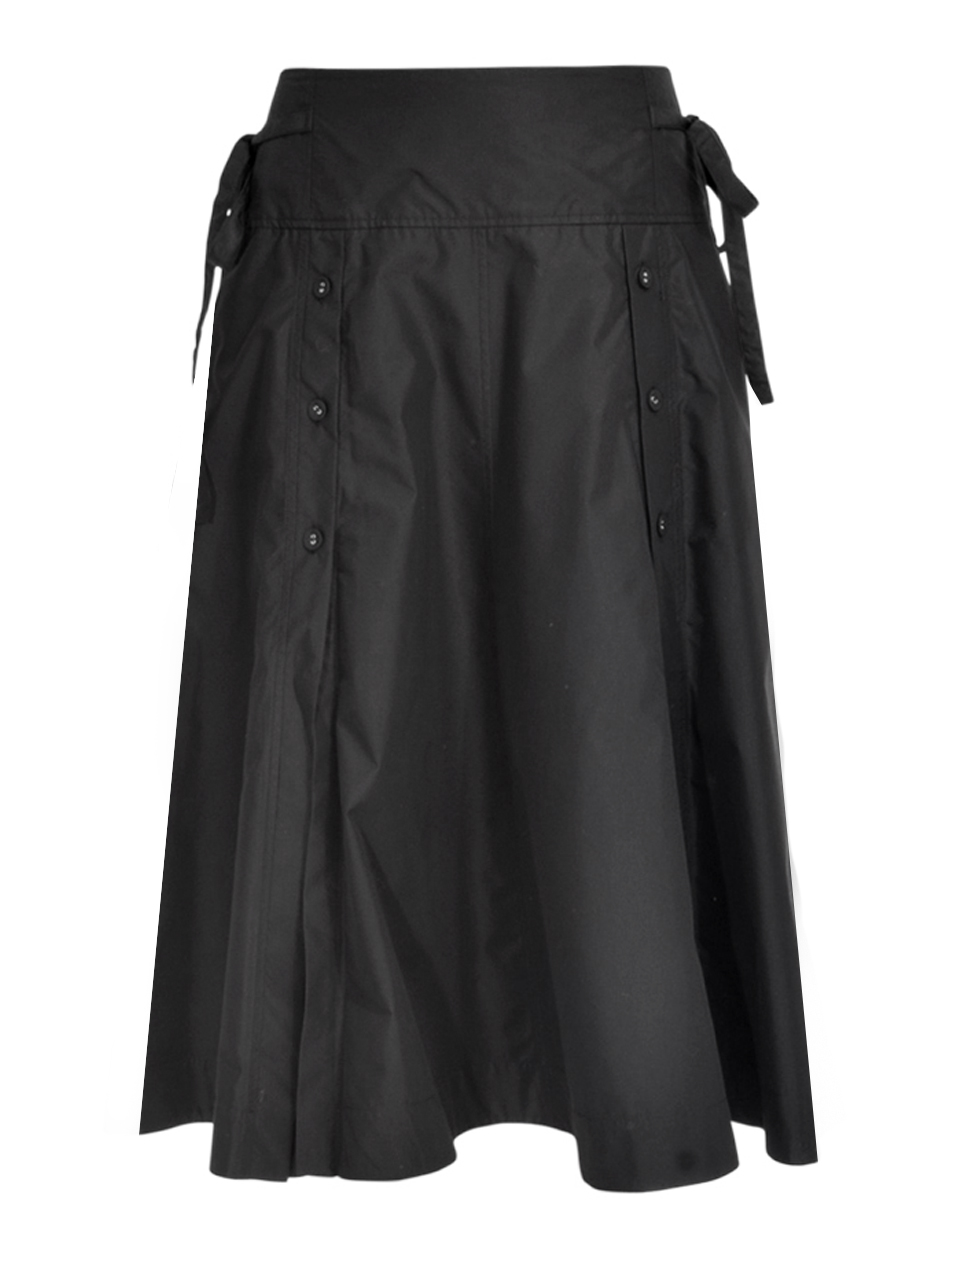 3.1 Phillip Lim Button Front Tie Waist Midi Skirt in Black Product Shot 